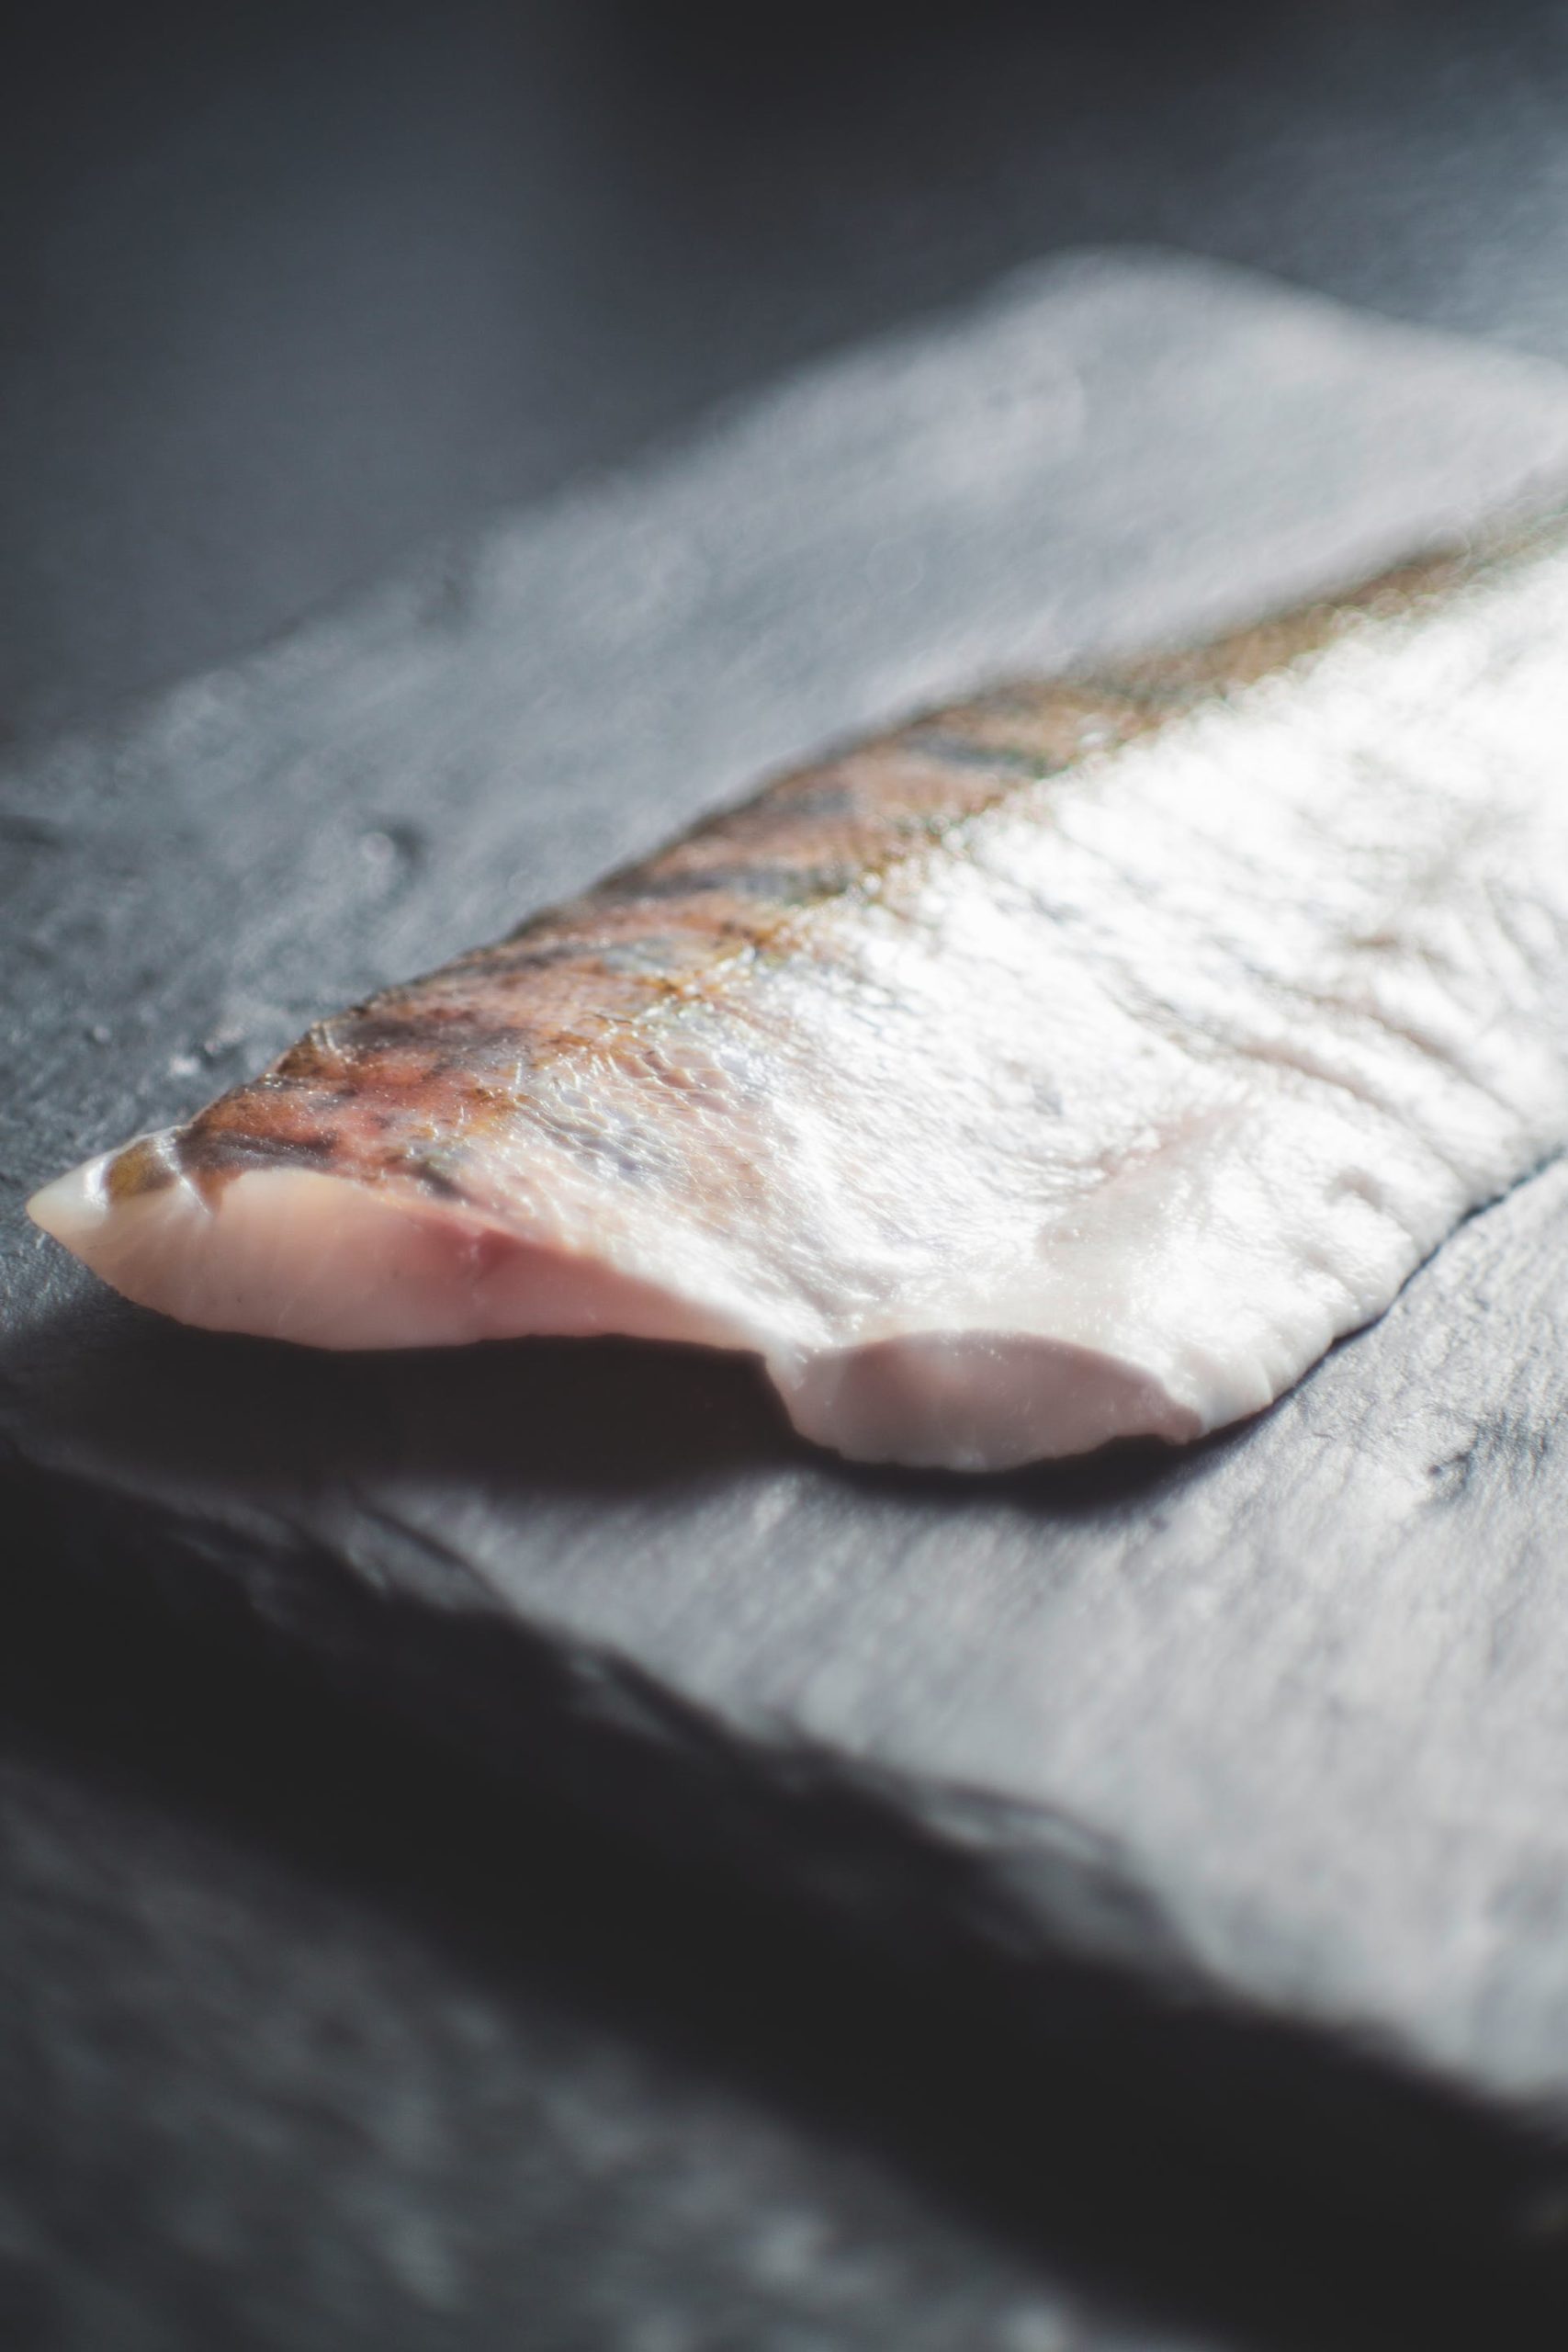 Imagen ilustrativa de la textura del pescado. Foto: Markus Spiske/Pexels.